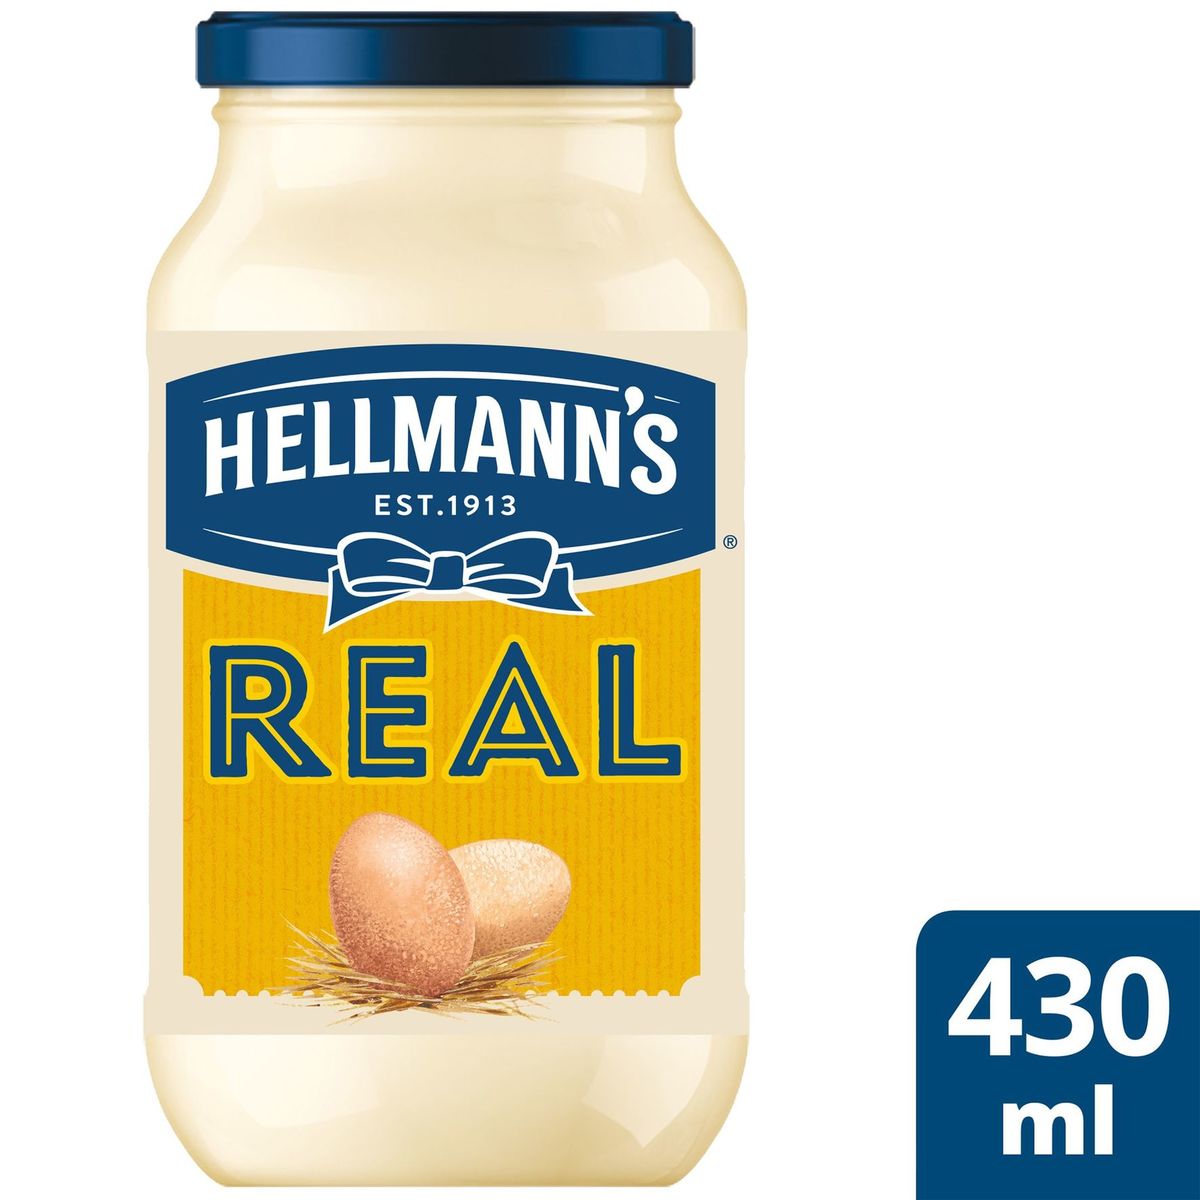 Hellmann's Real Mayonaise Original Met vrije uitloopeieren 430 ml